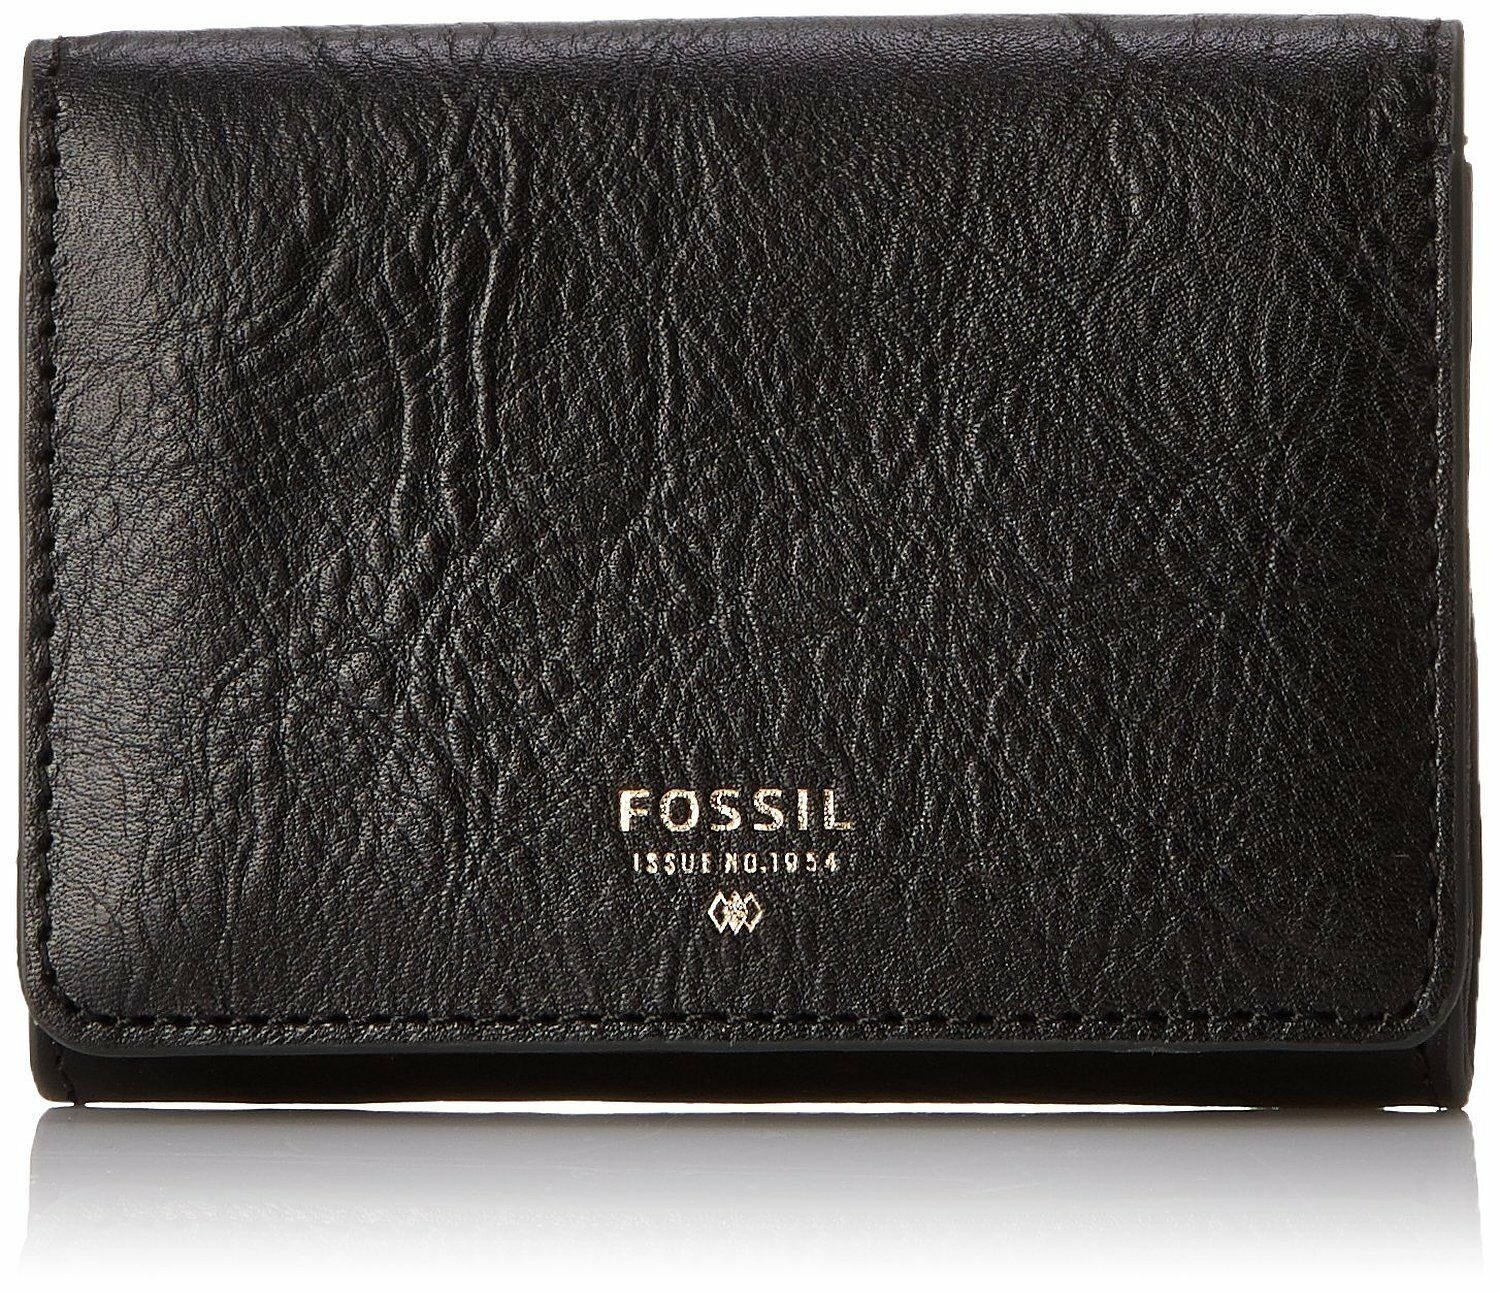 Fossil Original SL6686001 Black Sydney Gusseted Key Case Leather Women's Wallet